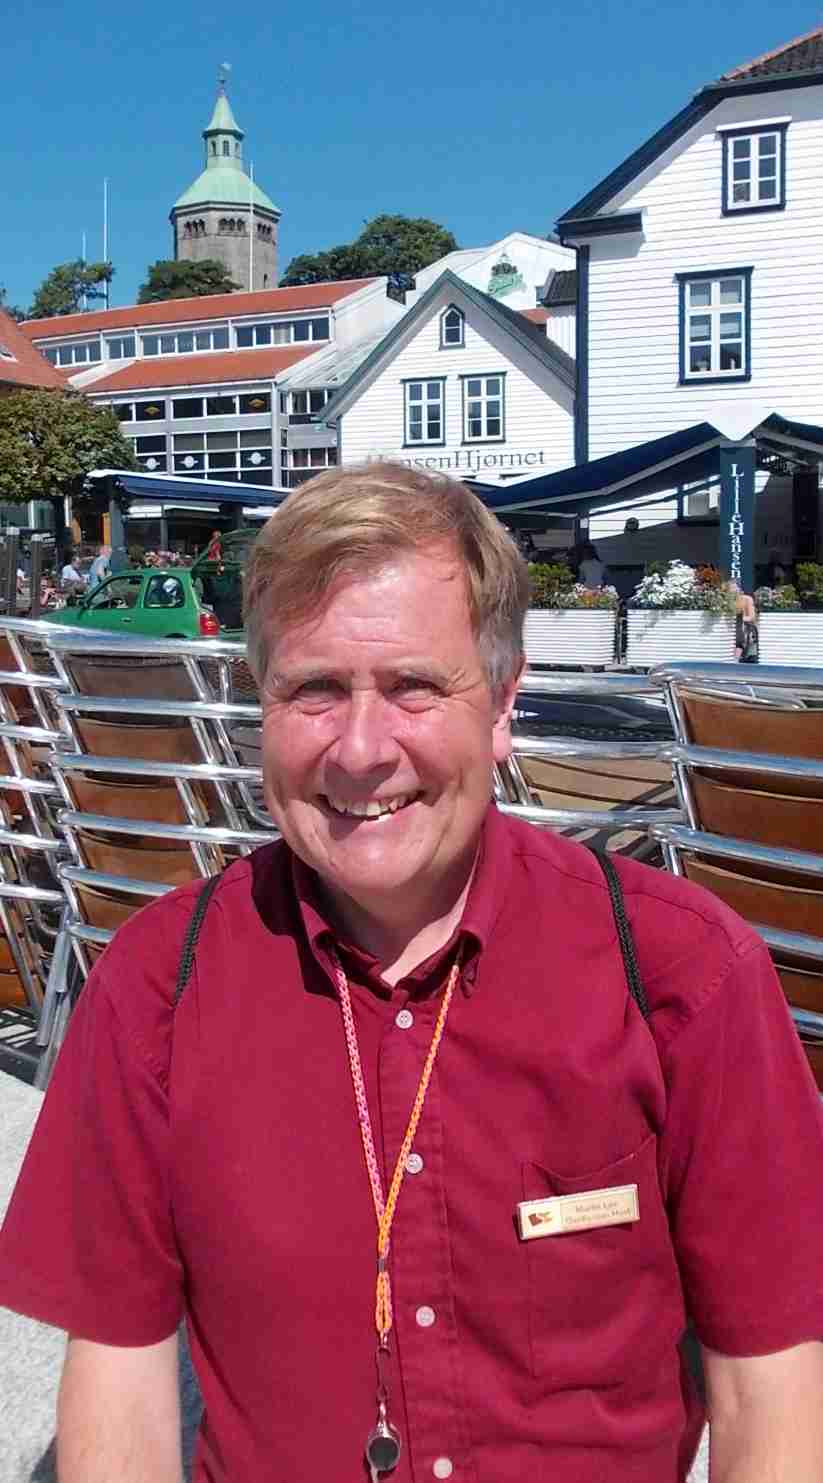 Martin P. Lee in Stavanger photo taken by June